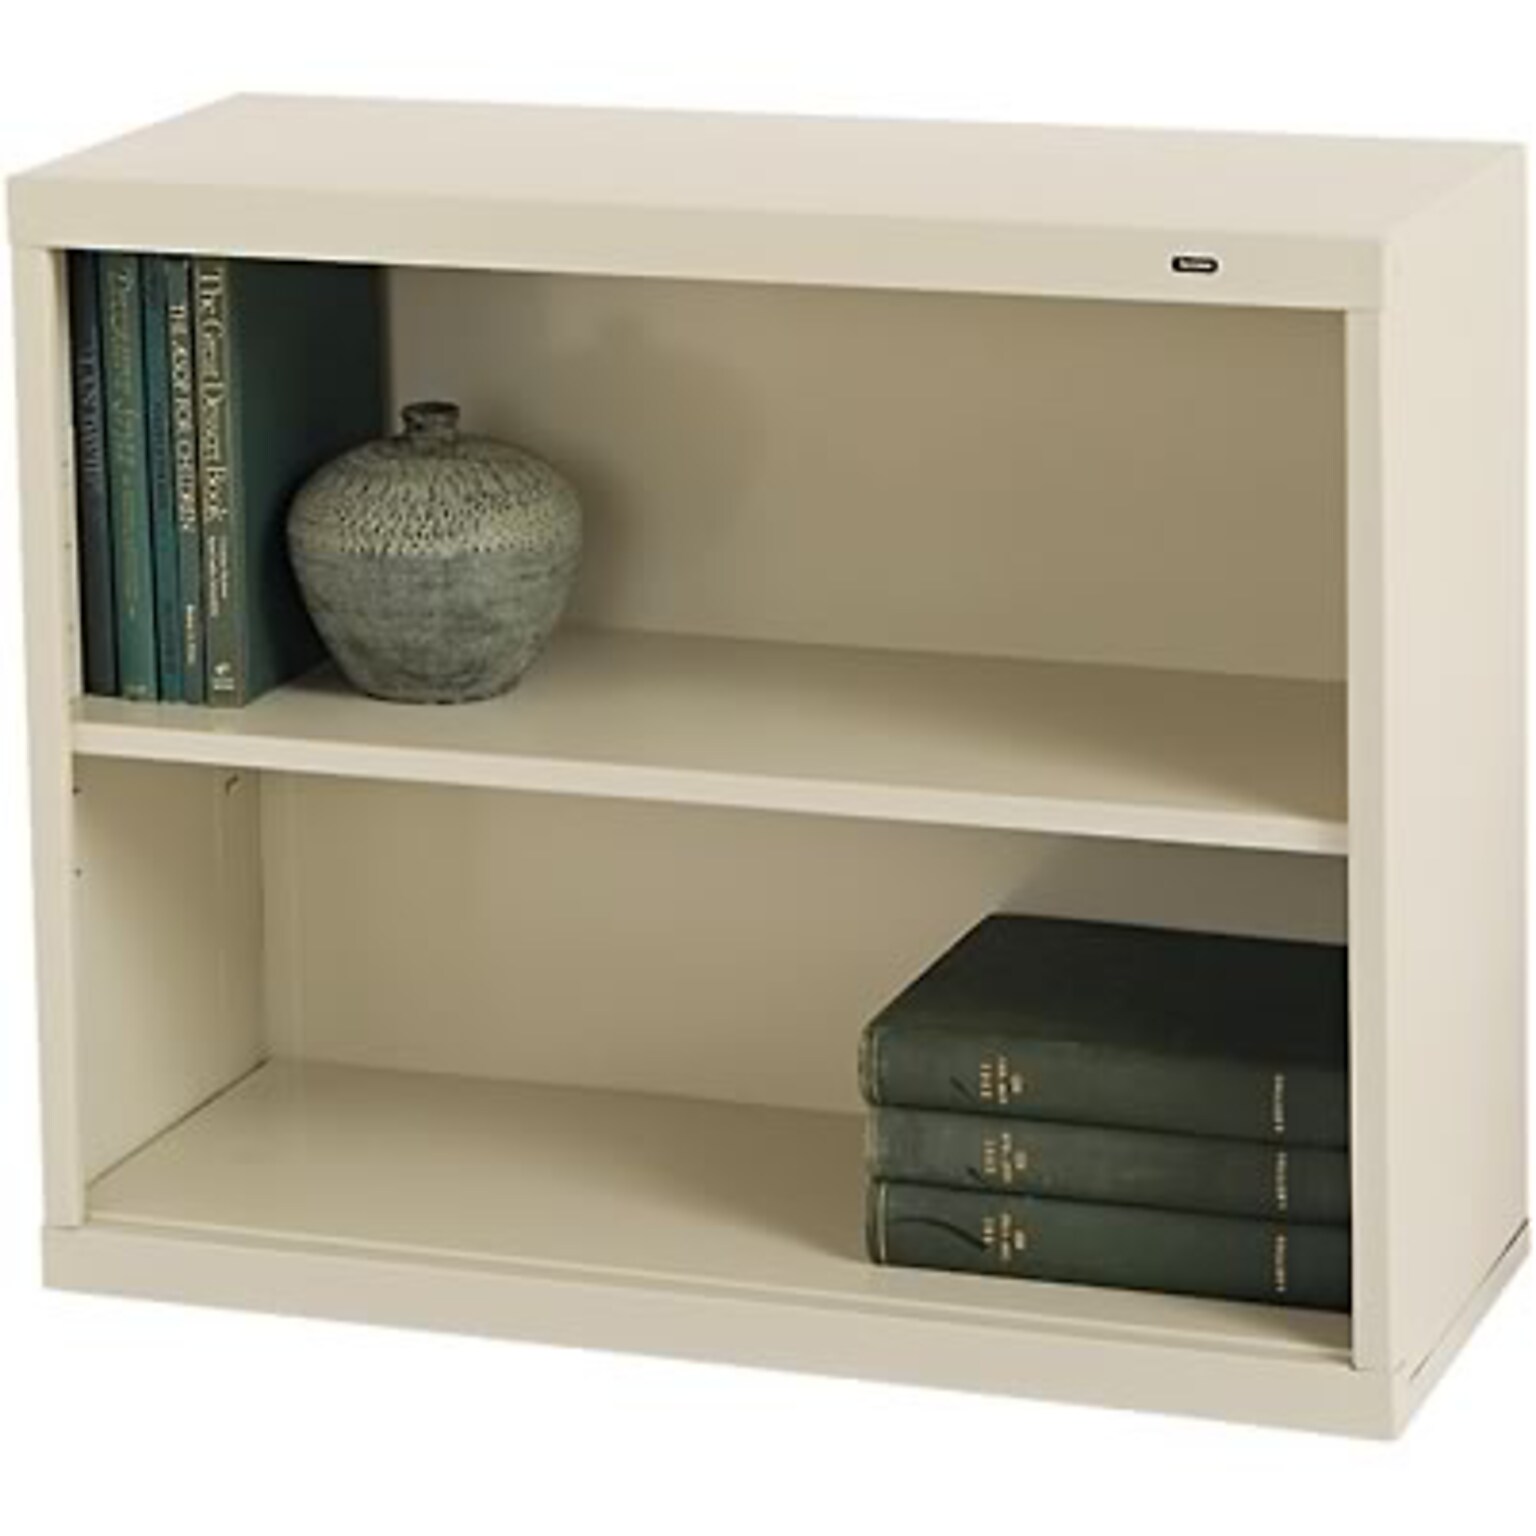 Tennsco 28 2-Shelf Bookcase with Adjustable Shelf, Putty, Metal (110041)